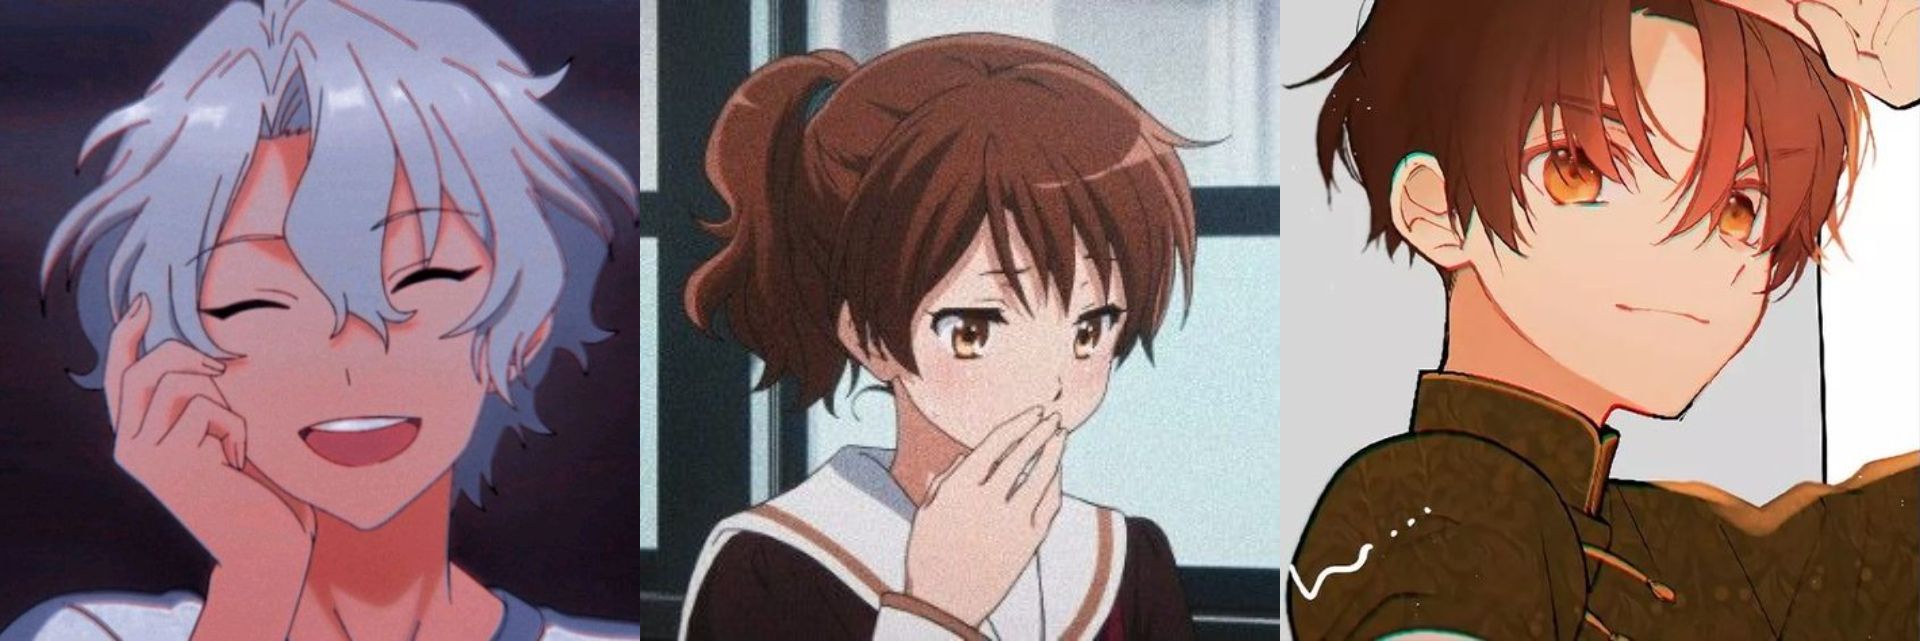 instagram accounts for anime clips｜TikTok Search